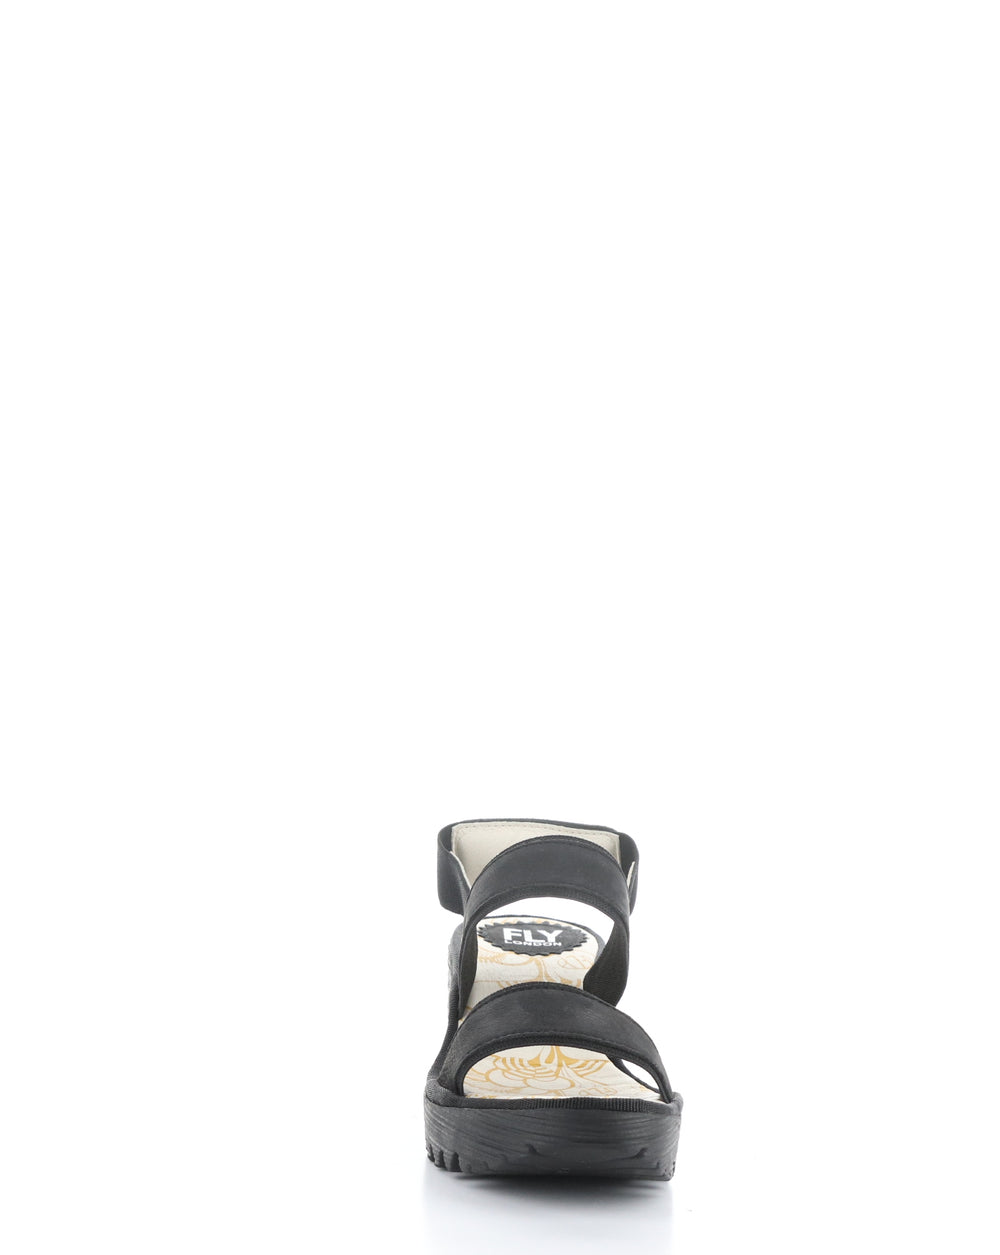 YACO416FLY 000 BLACK Elasticated Sandals